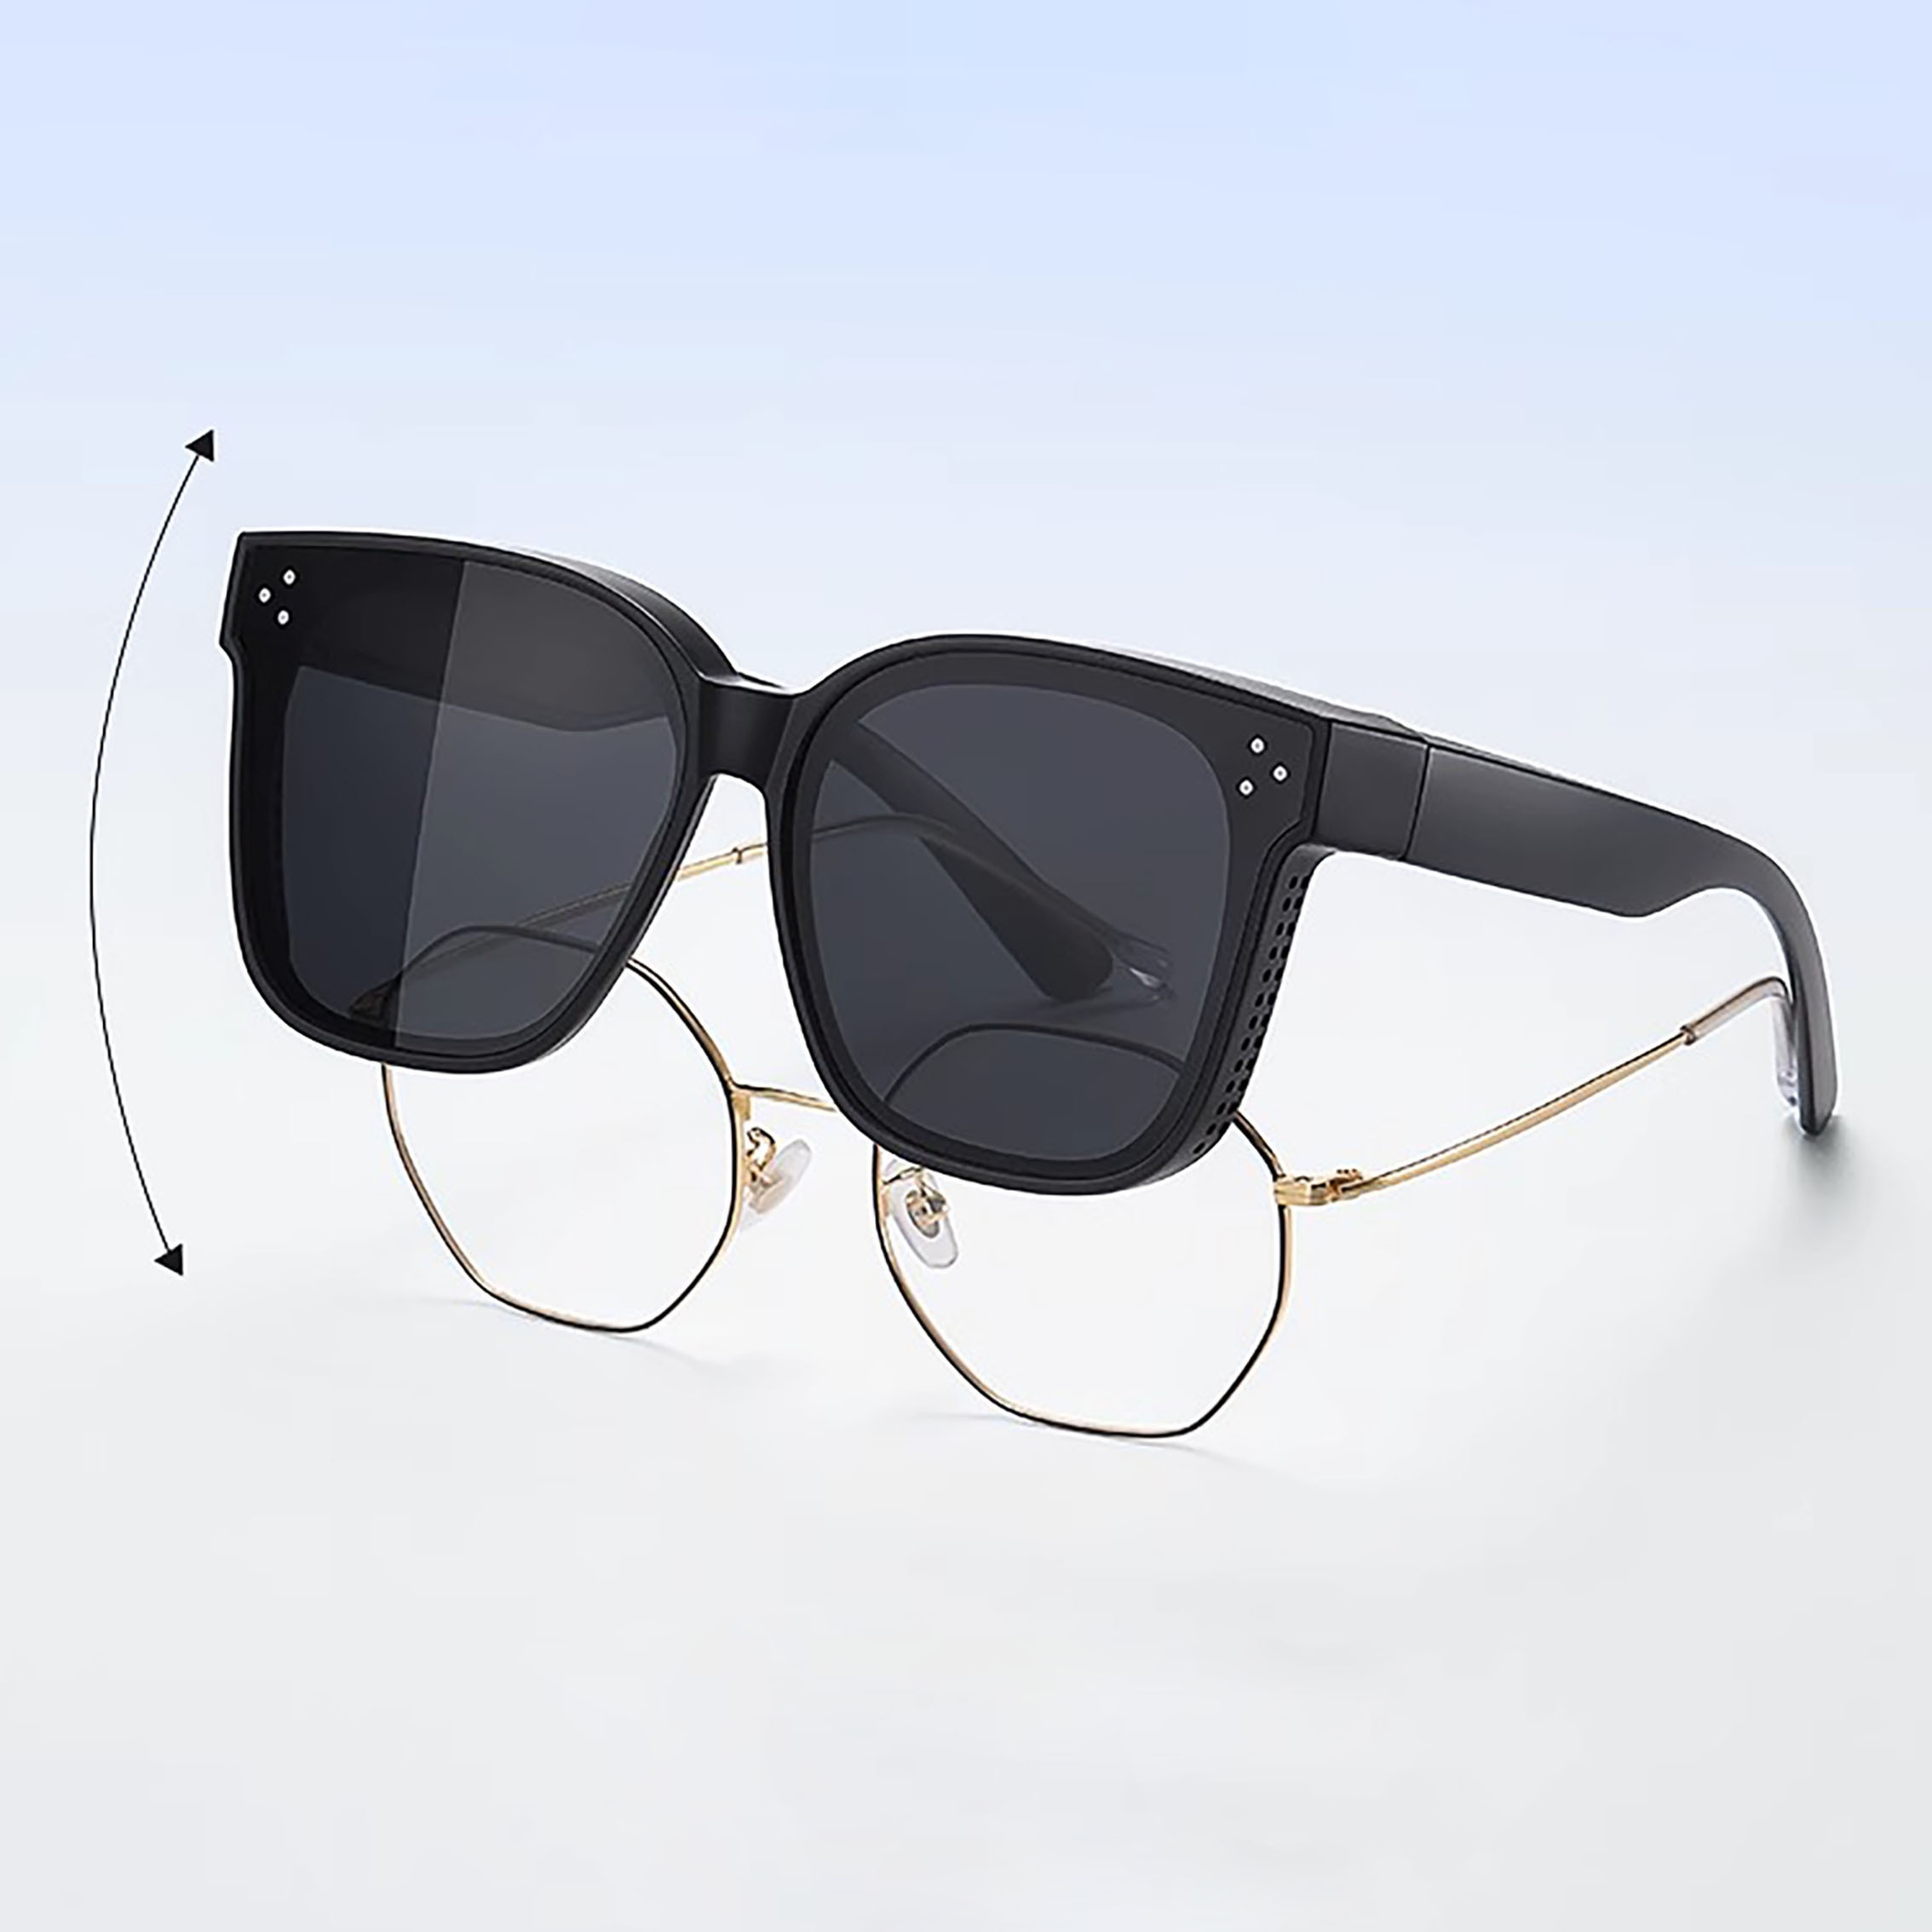 

Polarized Fit Over Fashion Glasses For Women Men, Anti-glare Wear Over Prescription Sun Shades For Driving Hiking Fishing